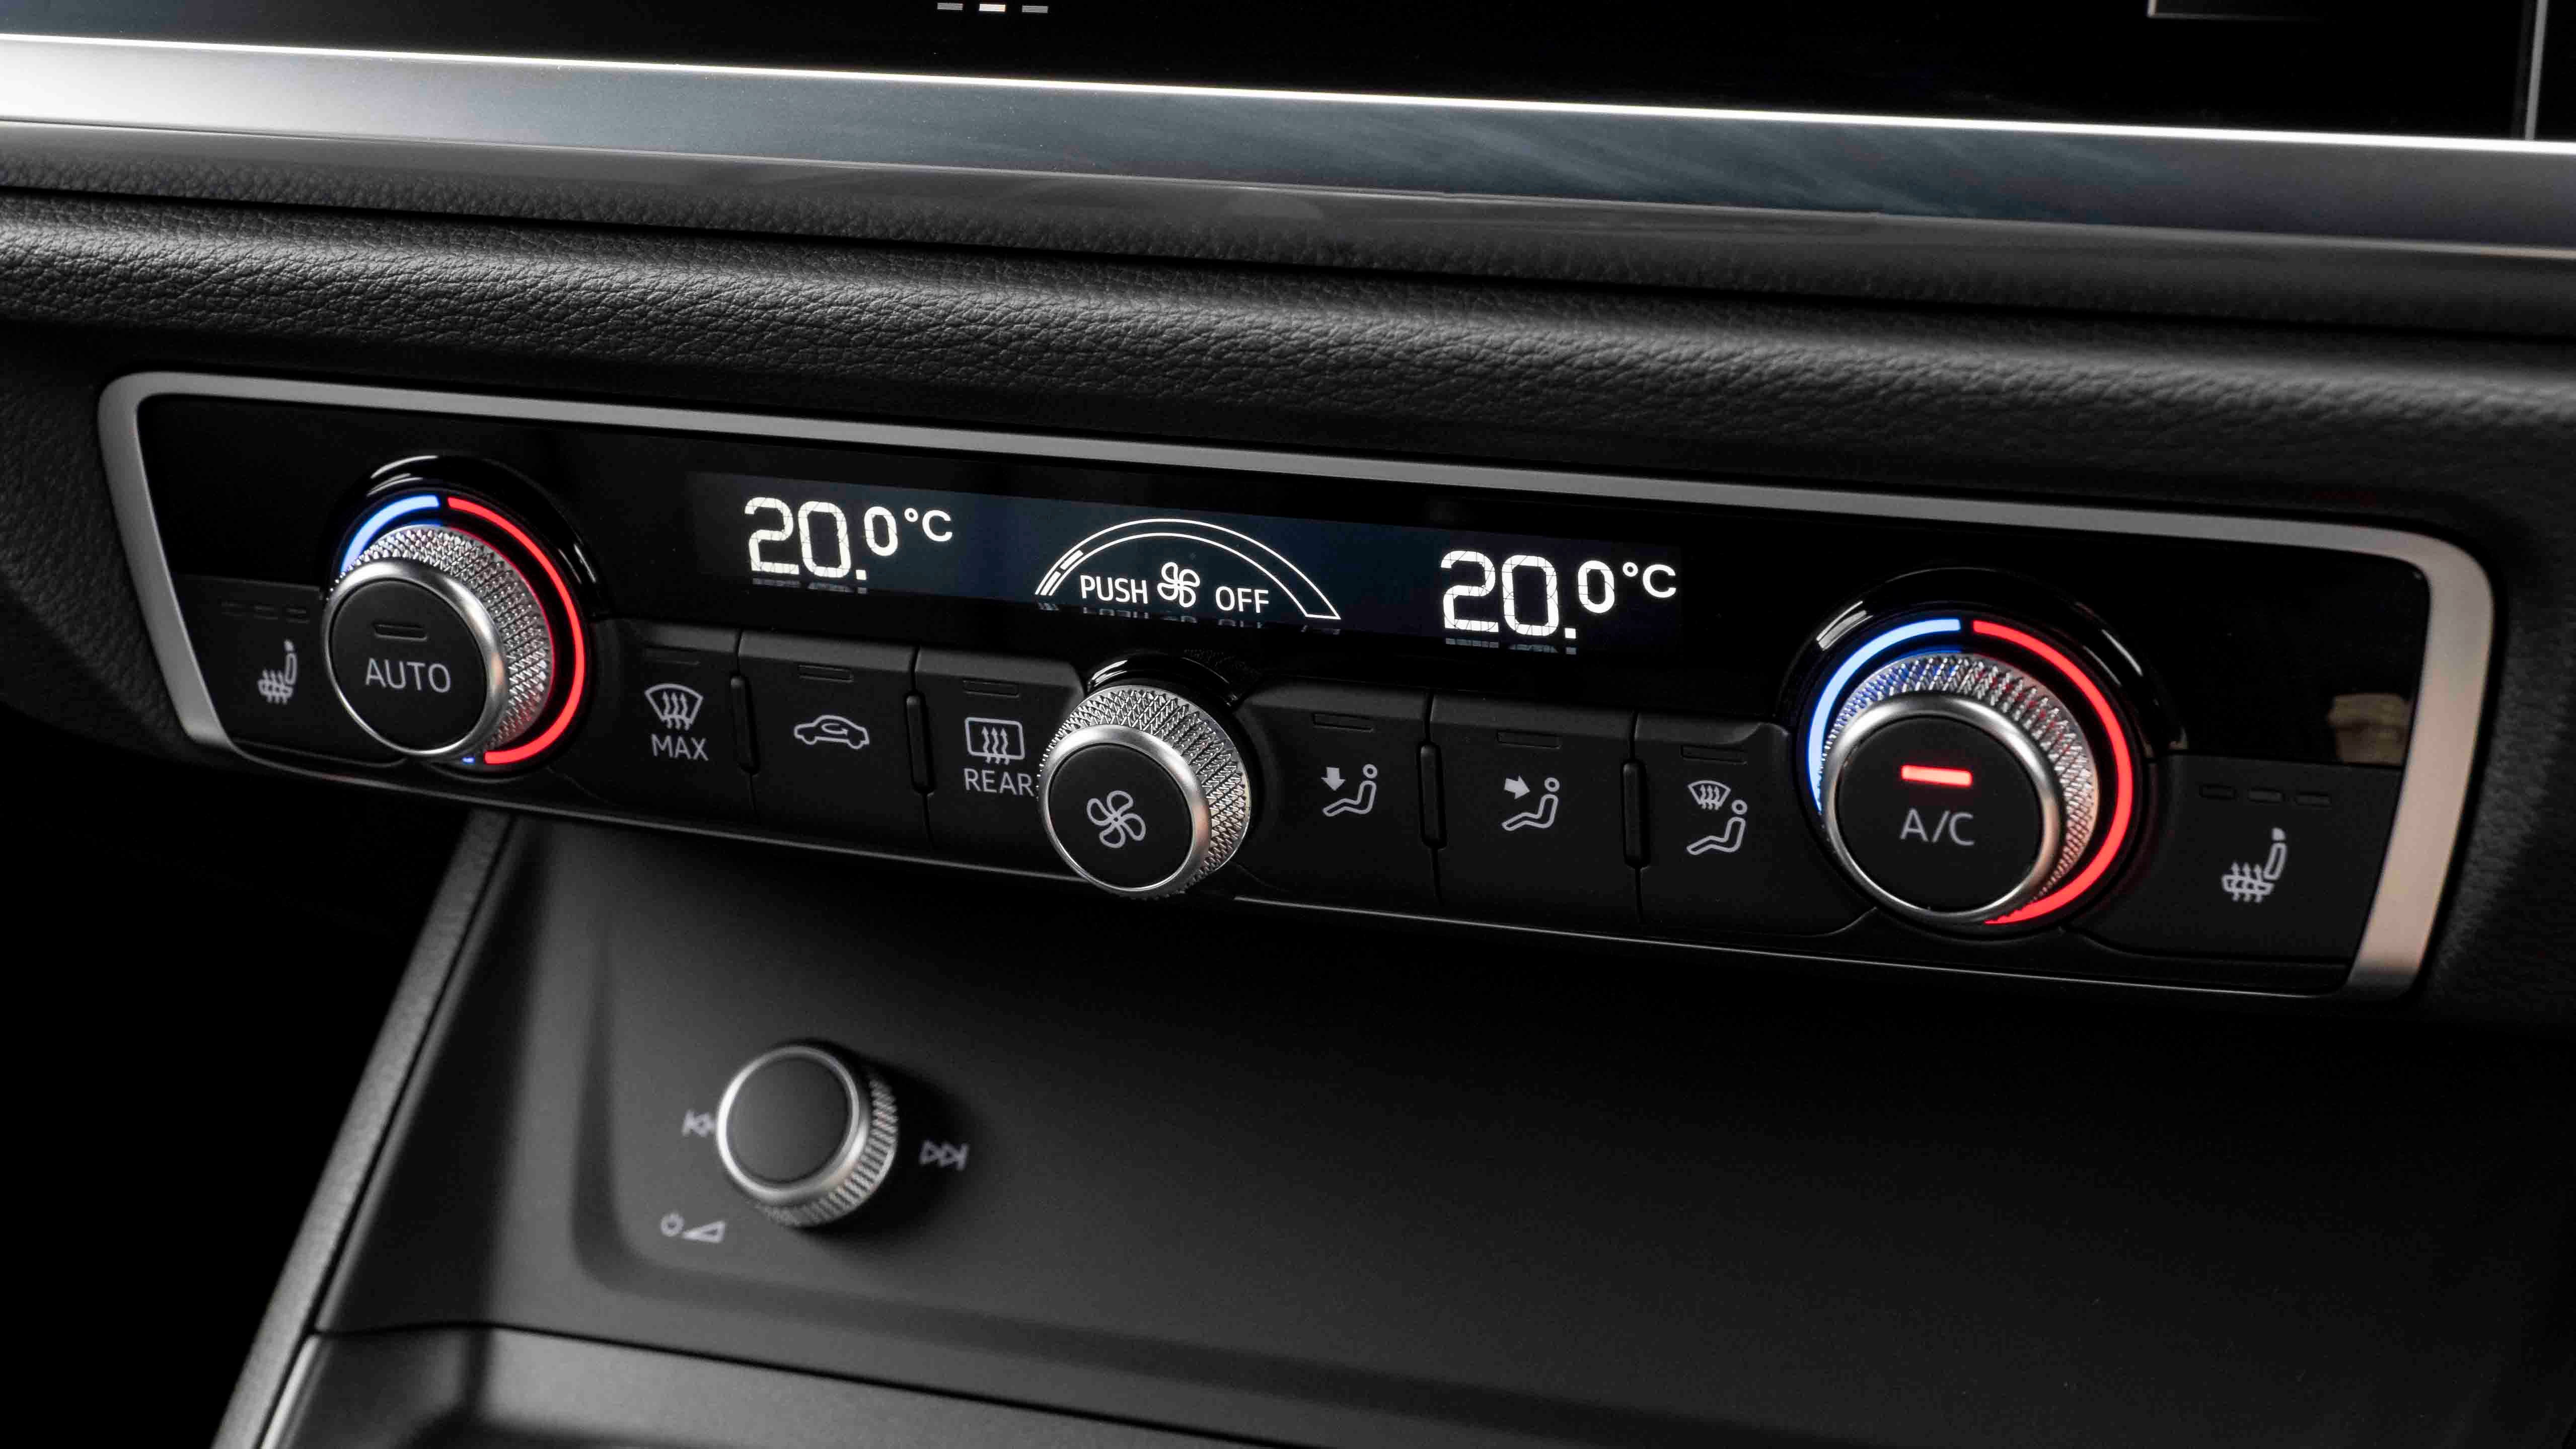 Audi Q3 climate controls